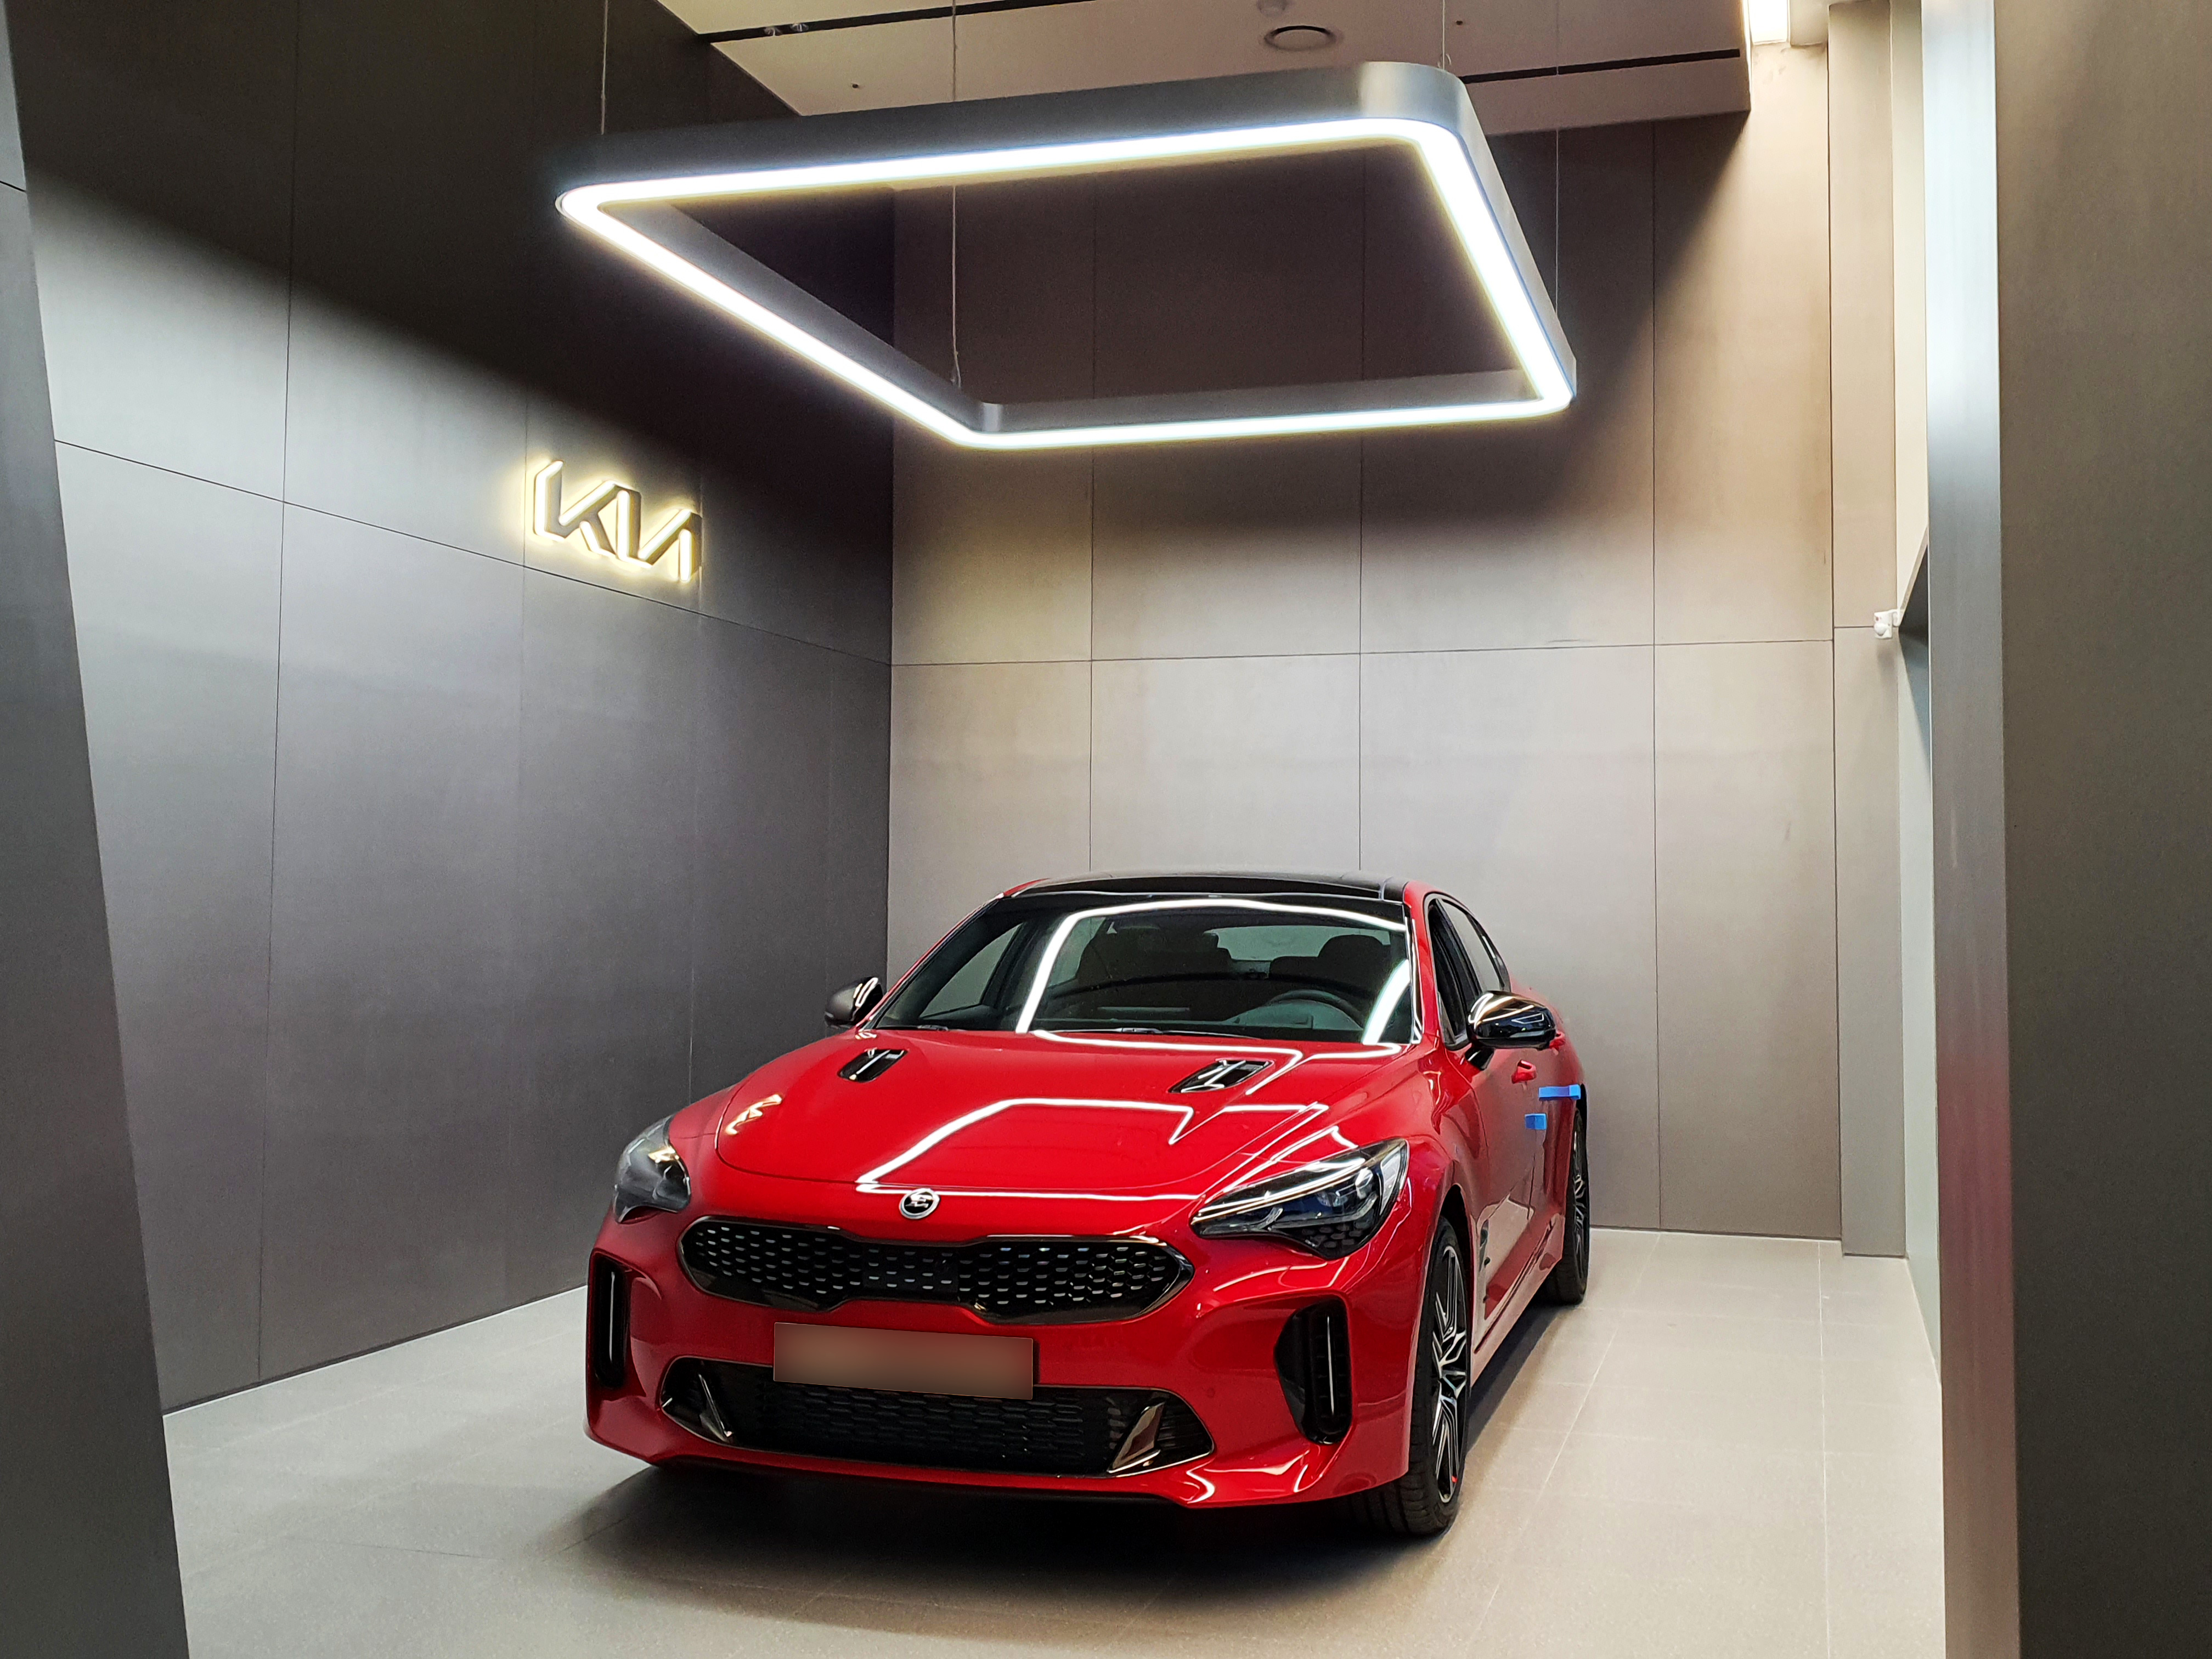 Kia Motors Showroom Korea